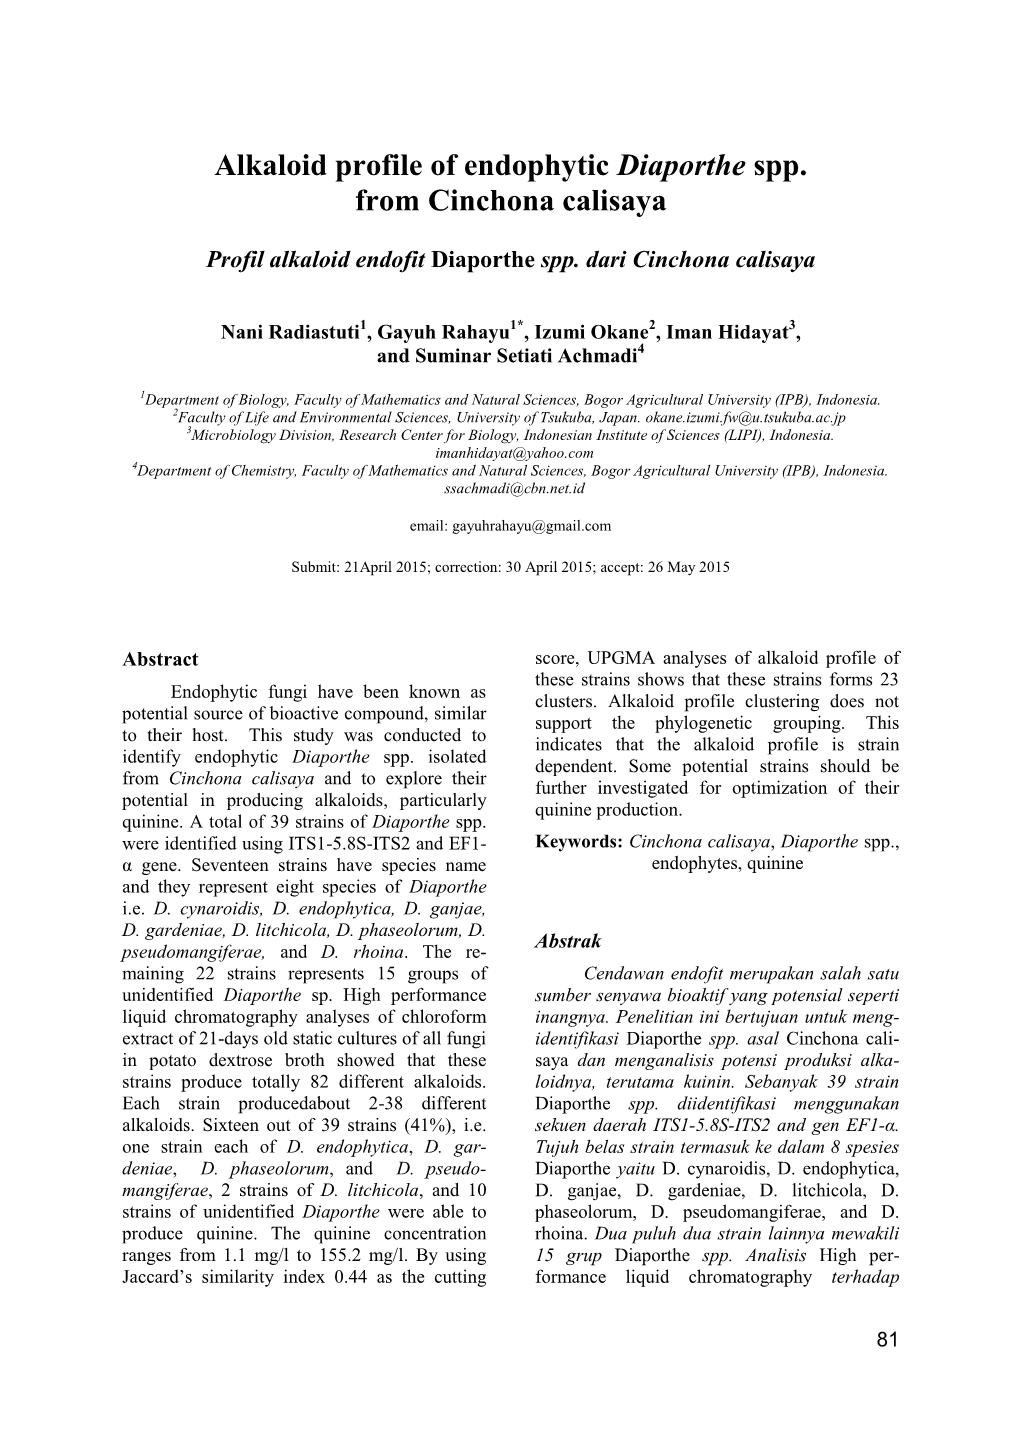 Alkaloid Profile of Endophytic Diaporthe Spp. from Cinchona Calisaya